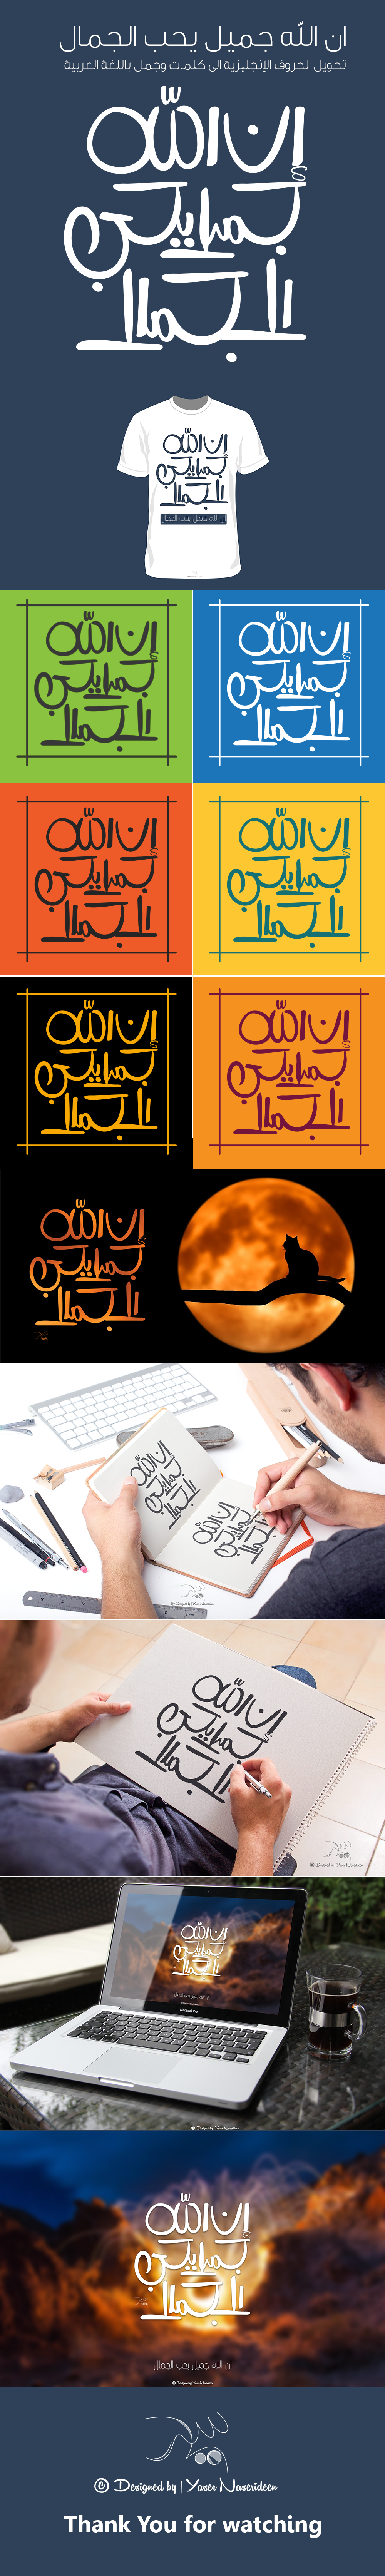 الله يحب الجمال sweet allah arabic calligraph tipe graphy design Arab palestine